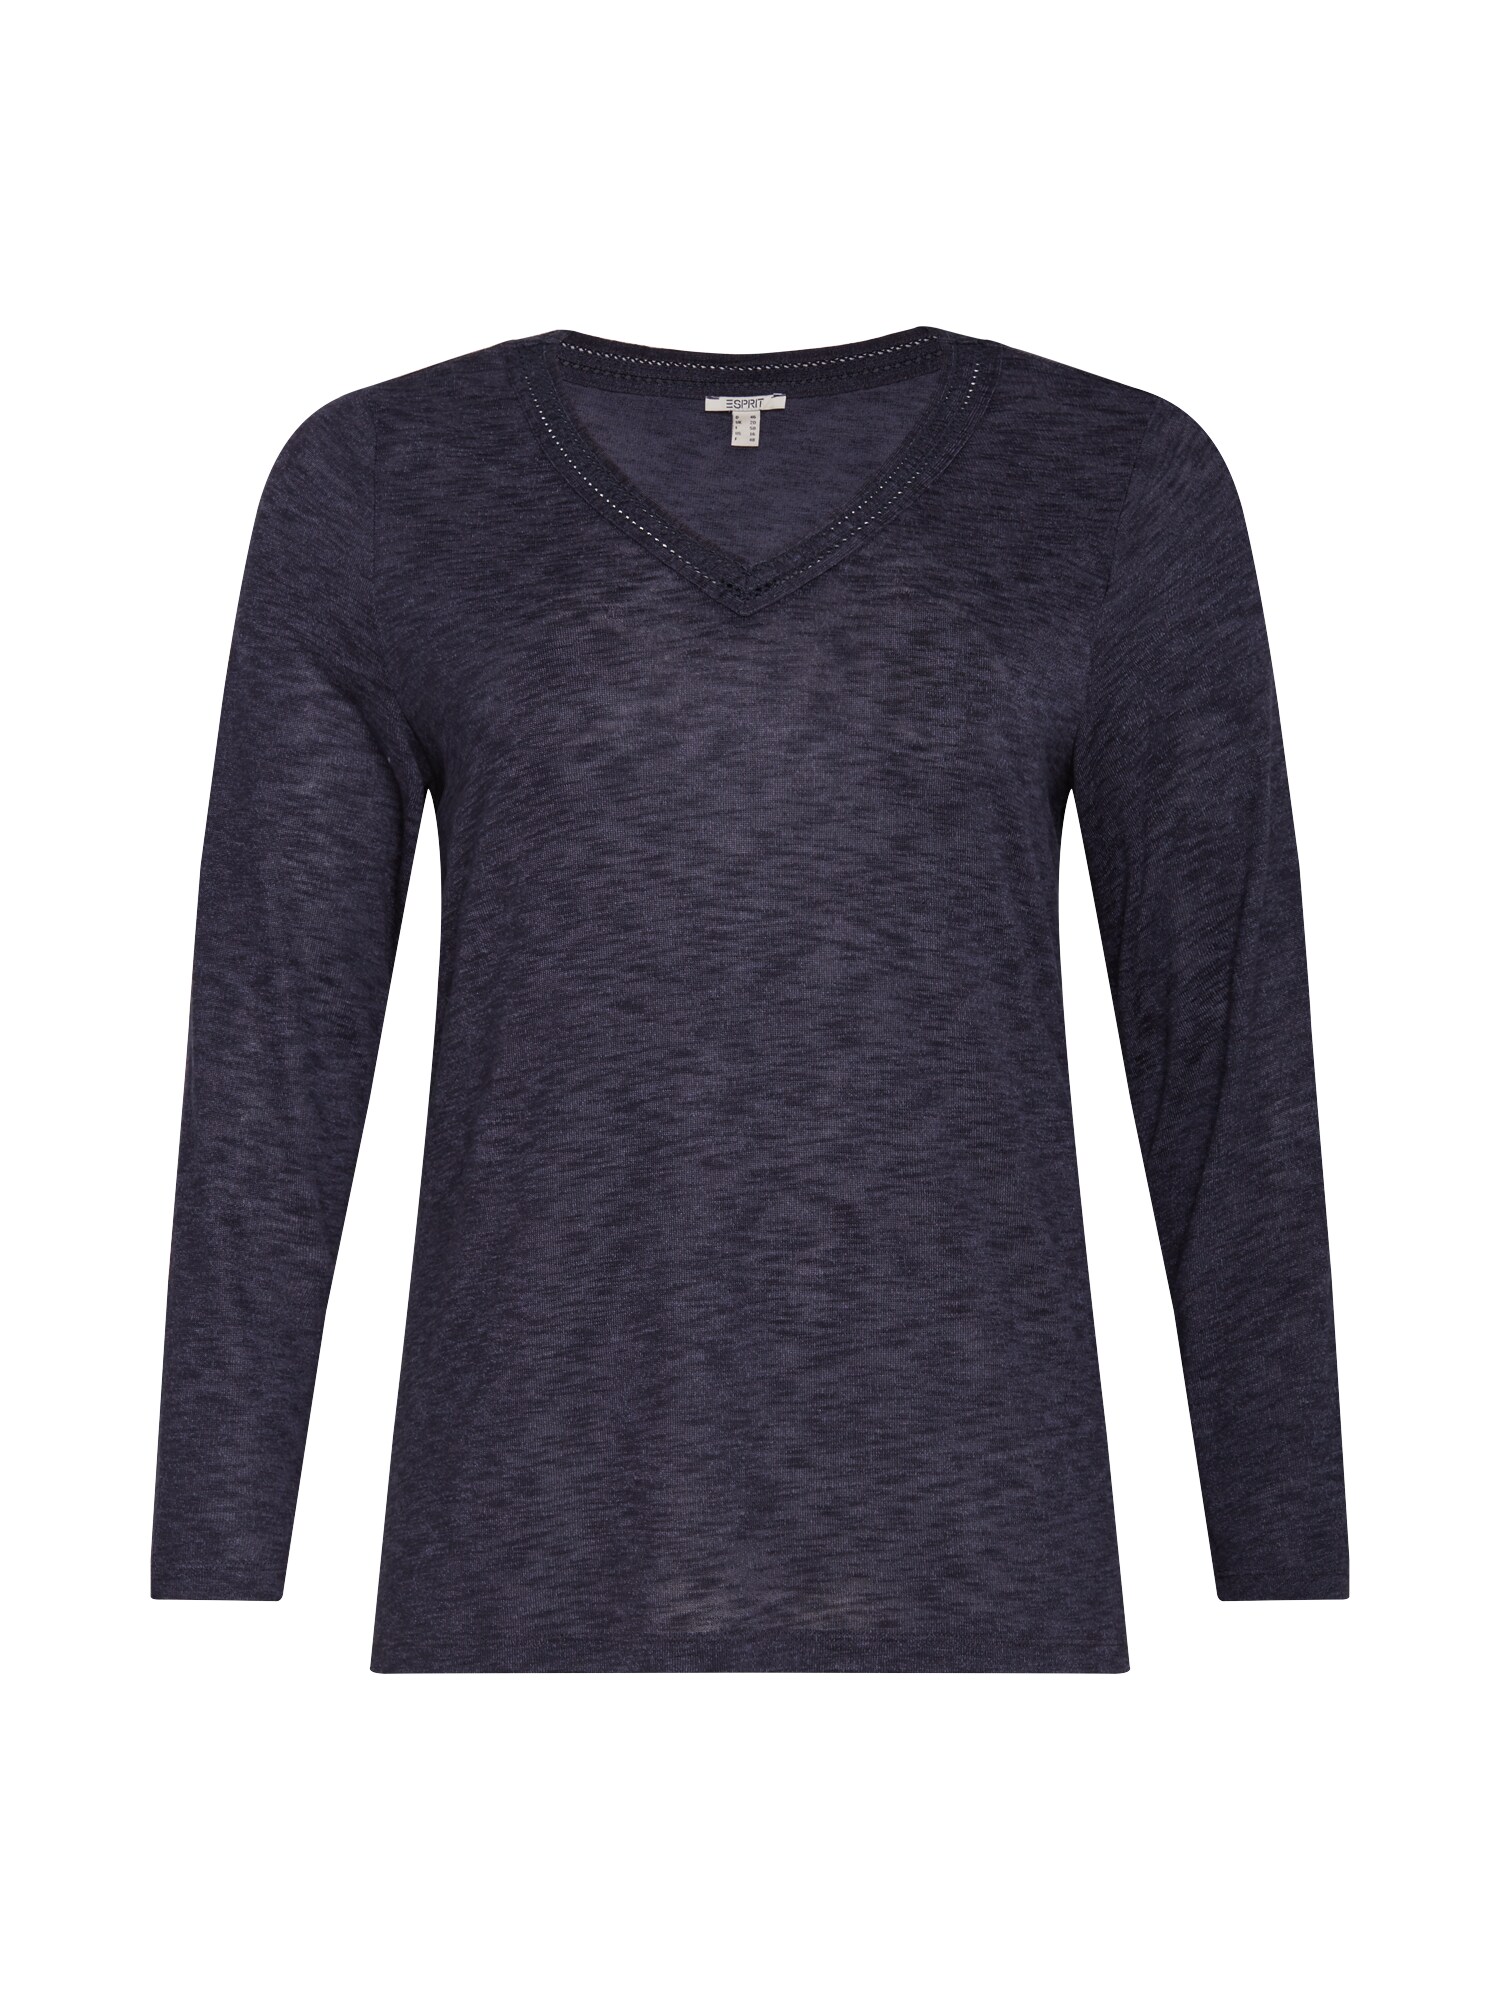 Esprit Curves Marškinėliai  bazalto pilka